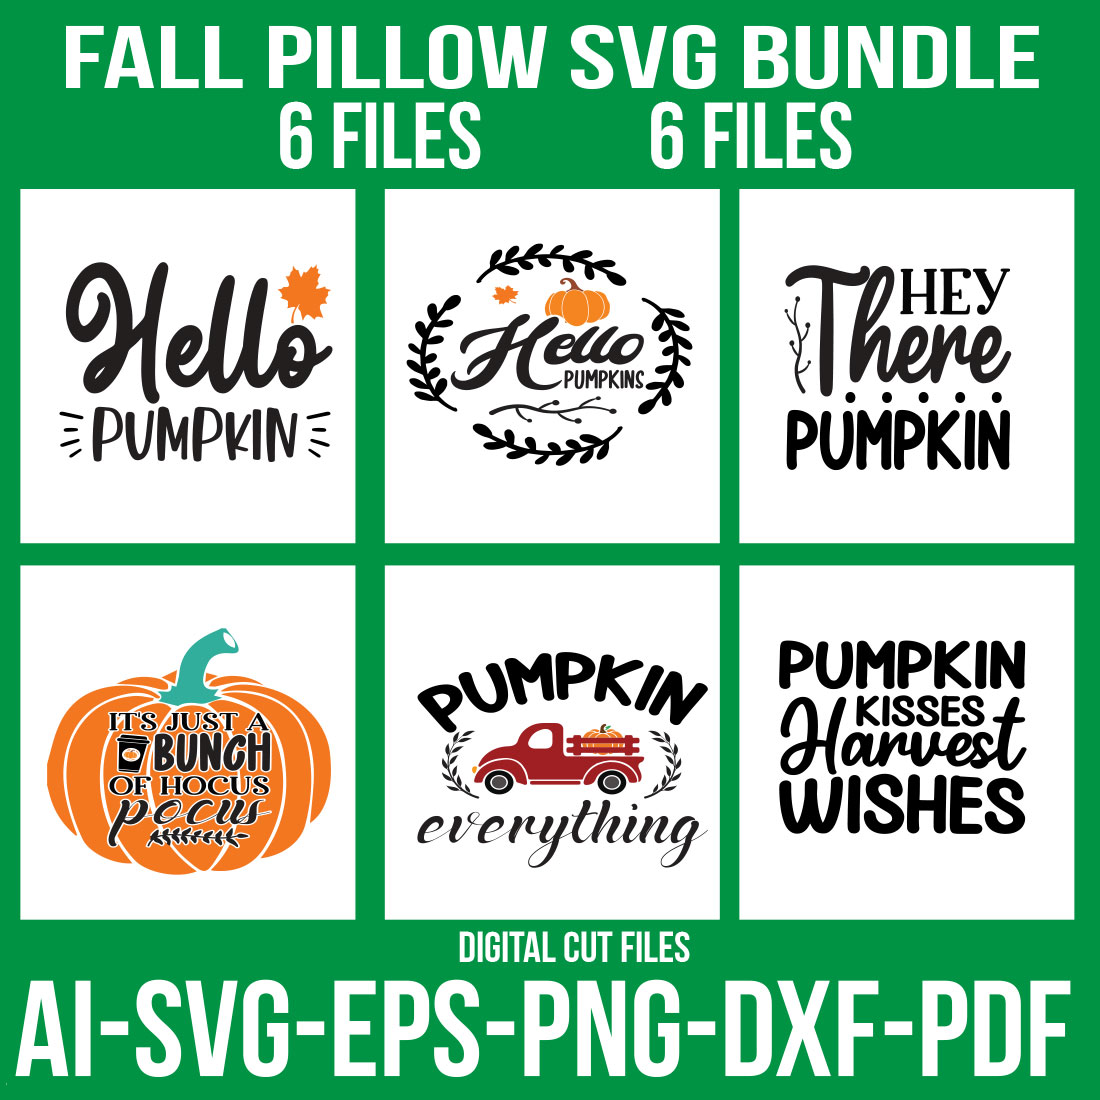 Fall Pillow SVG Bundle cover image.